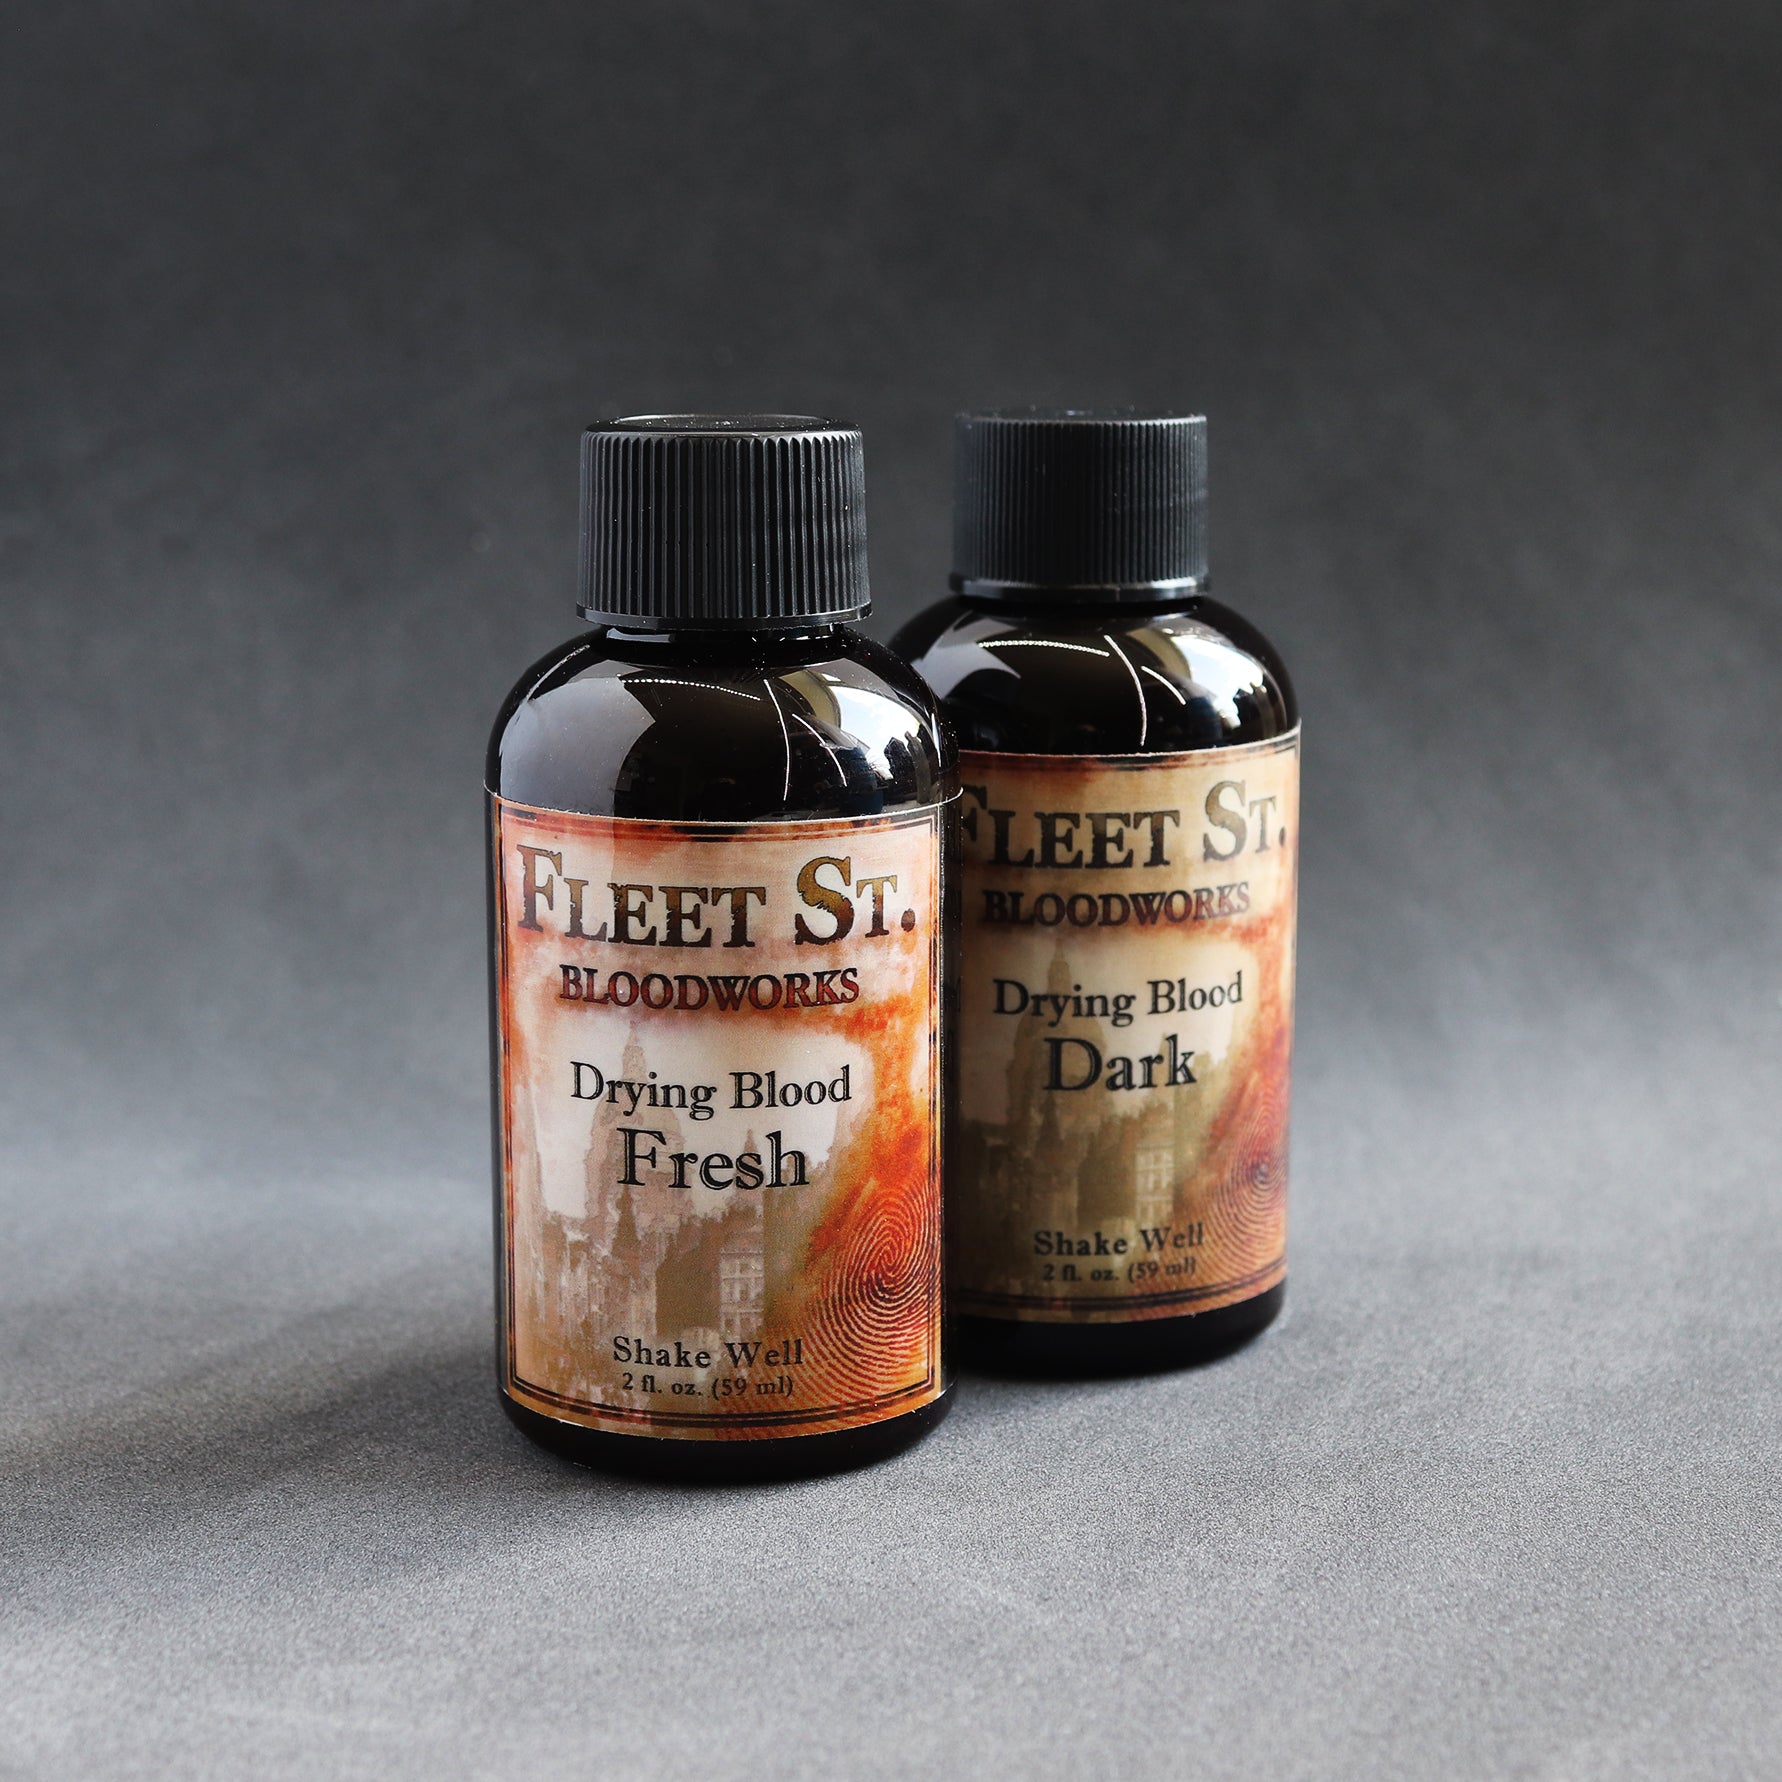 Two bottles of Fleet St. Drying Blood